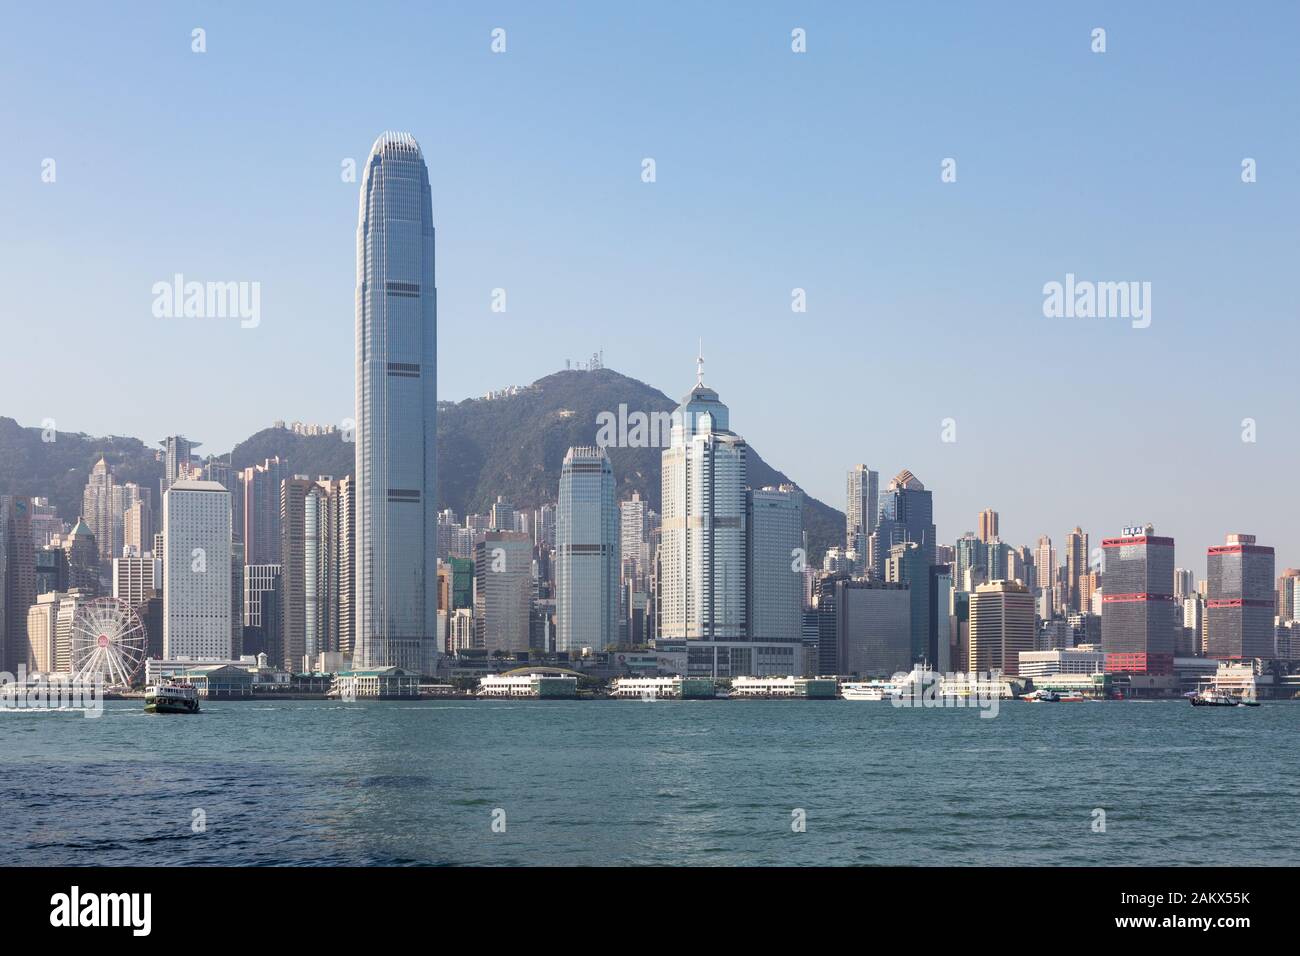 Hong Kong skyline - Hong Kong Island including International Finance Centre Two (2 IFC) skyscraper, Hong Kong Harbour, Hong Kong Asia Stock Photo